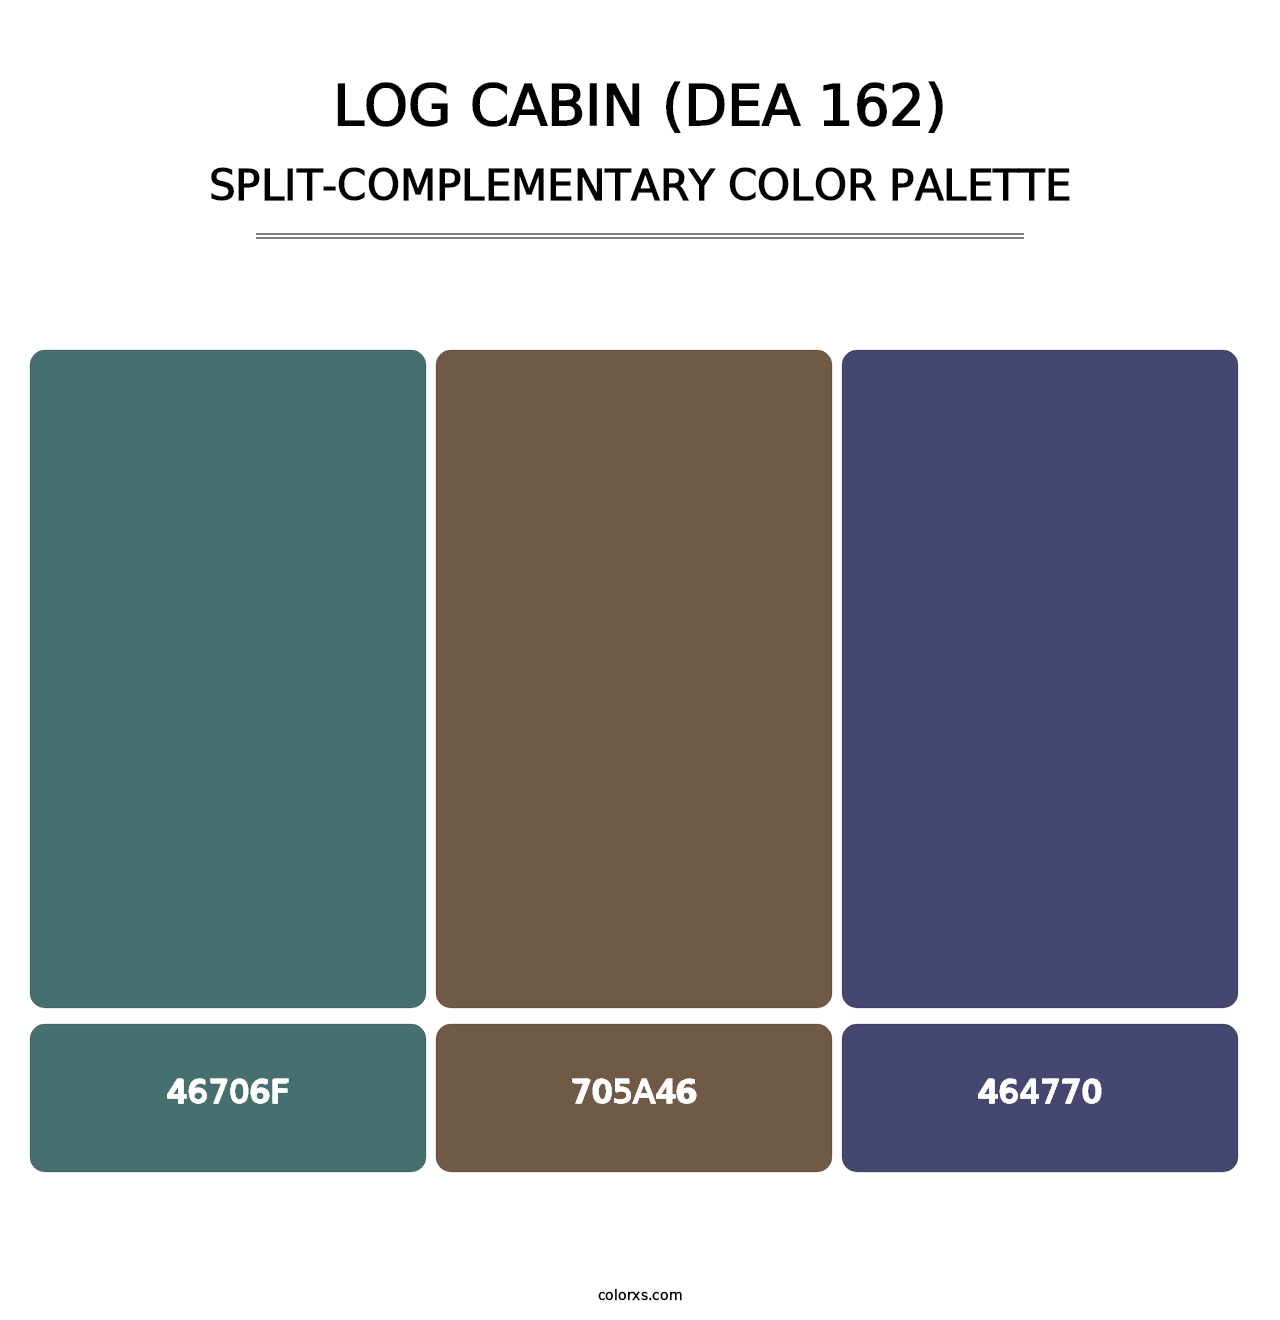 Log Cabin (DEA 162) - Split-Complementary Color Palette